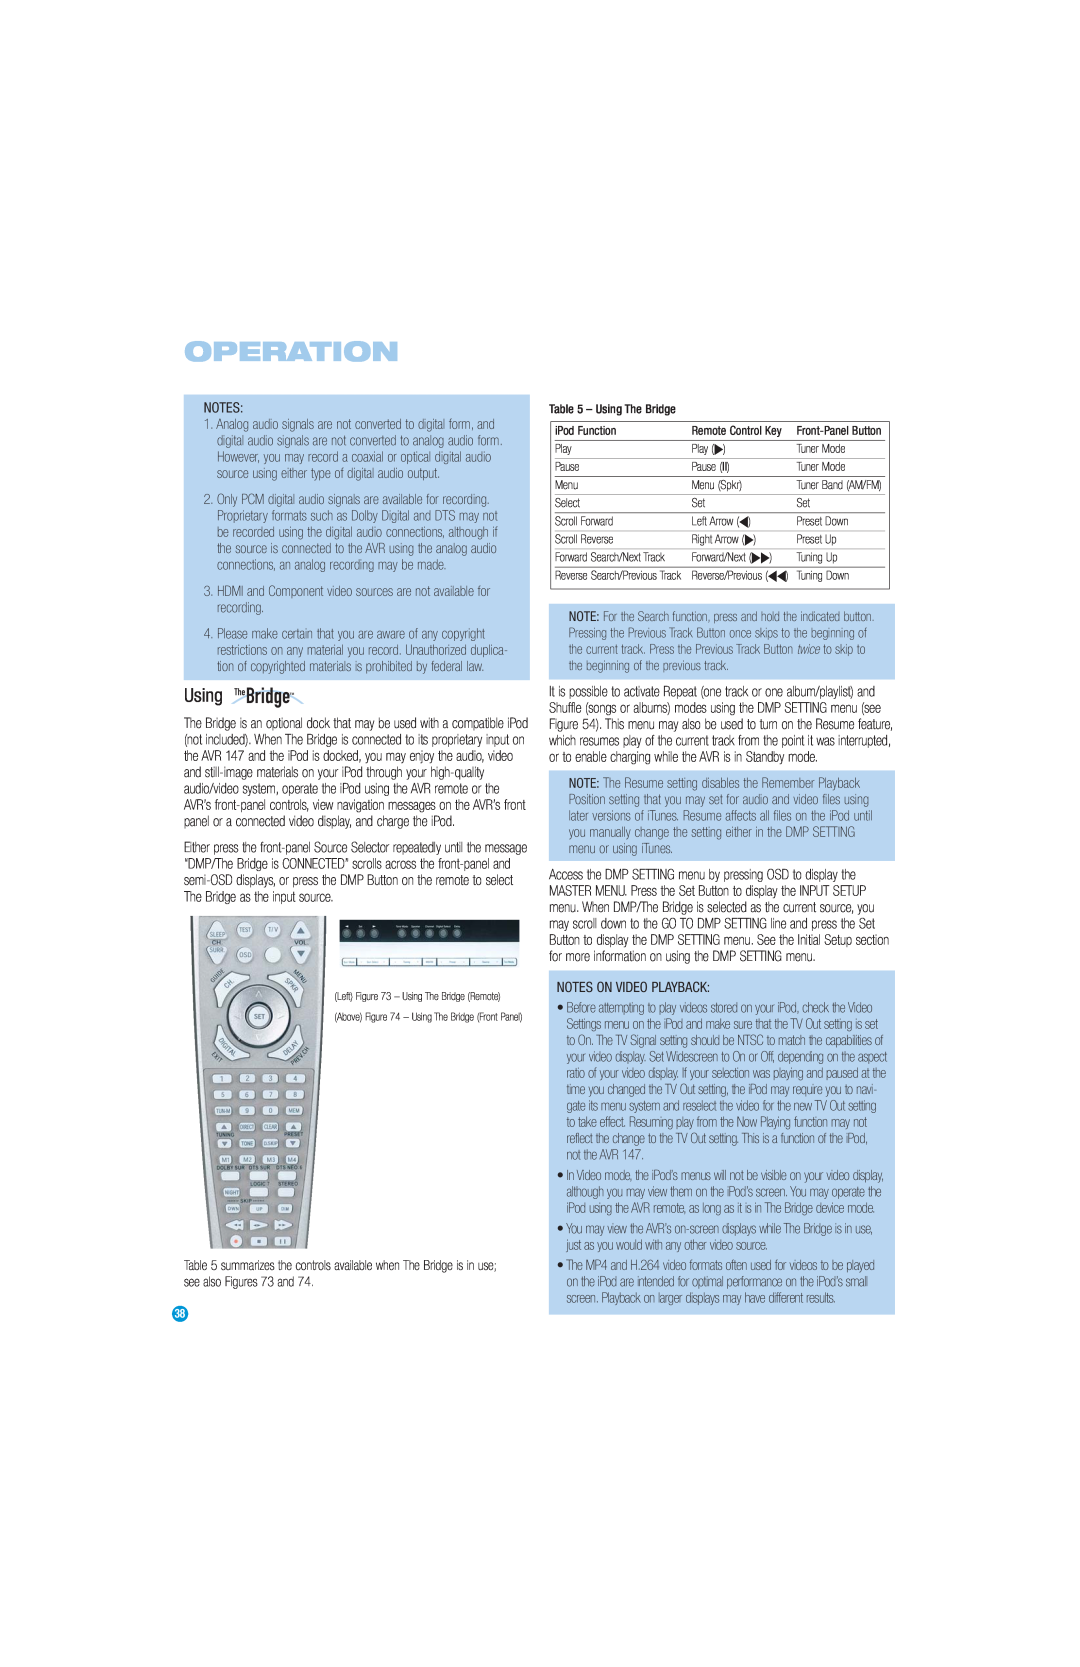 Harman-Kardon AVR 147 owner manual Using TheBridgeTM, Operation, Notes On Video Playback 